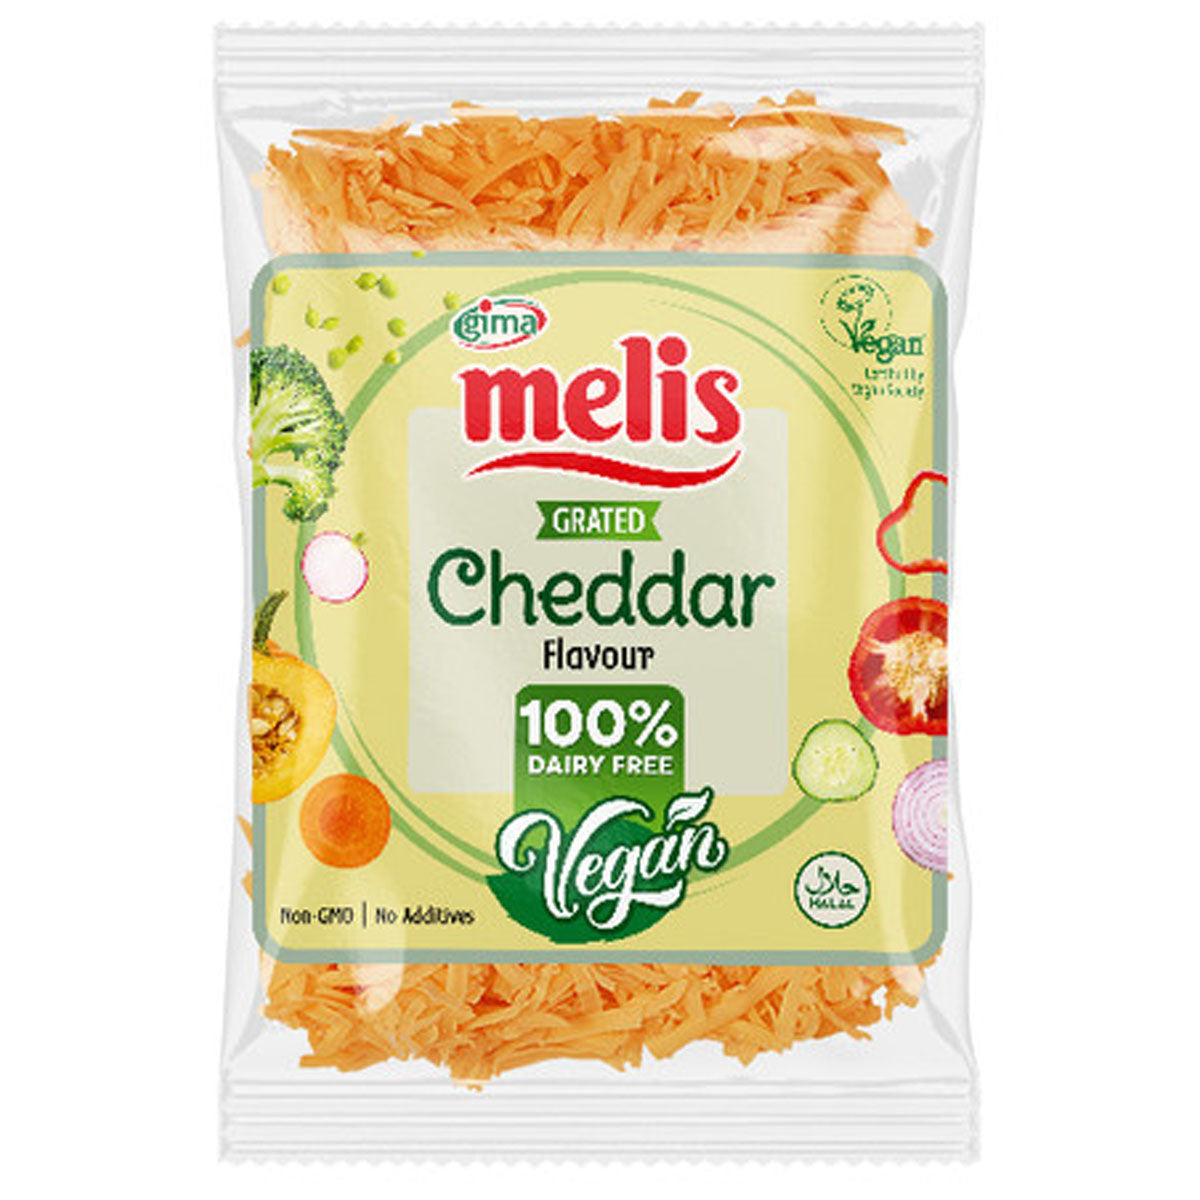 A bag of Melis - Vegan Grated Cheddar - 200g.